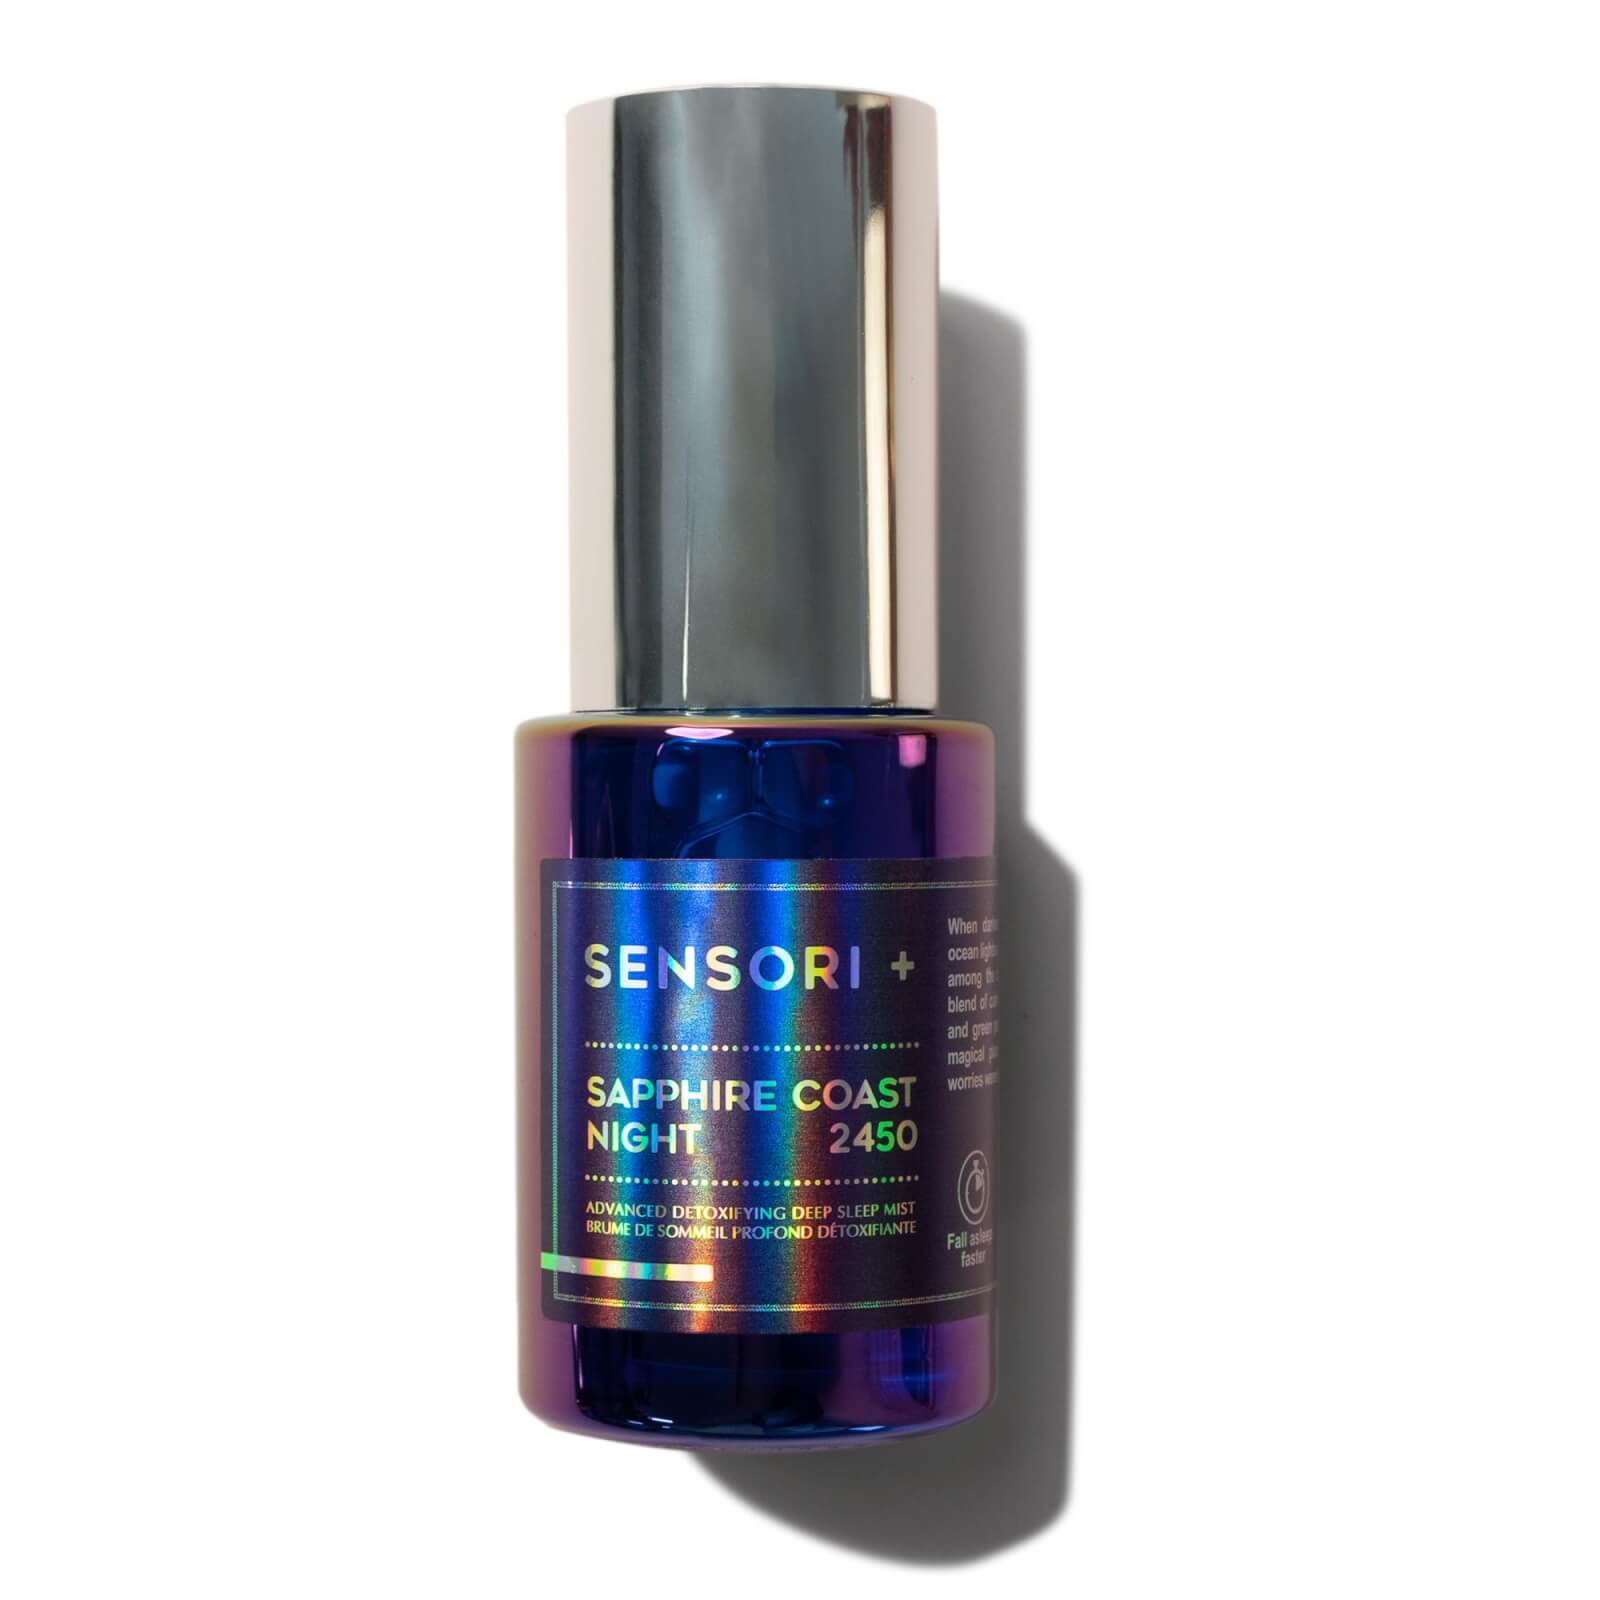 SENSORI+ Advanced Detoxifying Deep Sleep Sapphire Coast Night Mist 30ml lookfantastic.com imagine